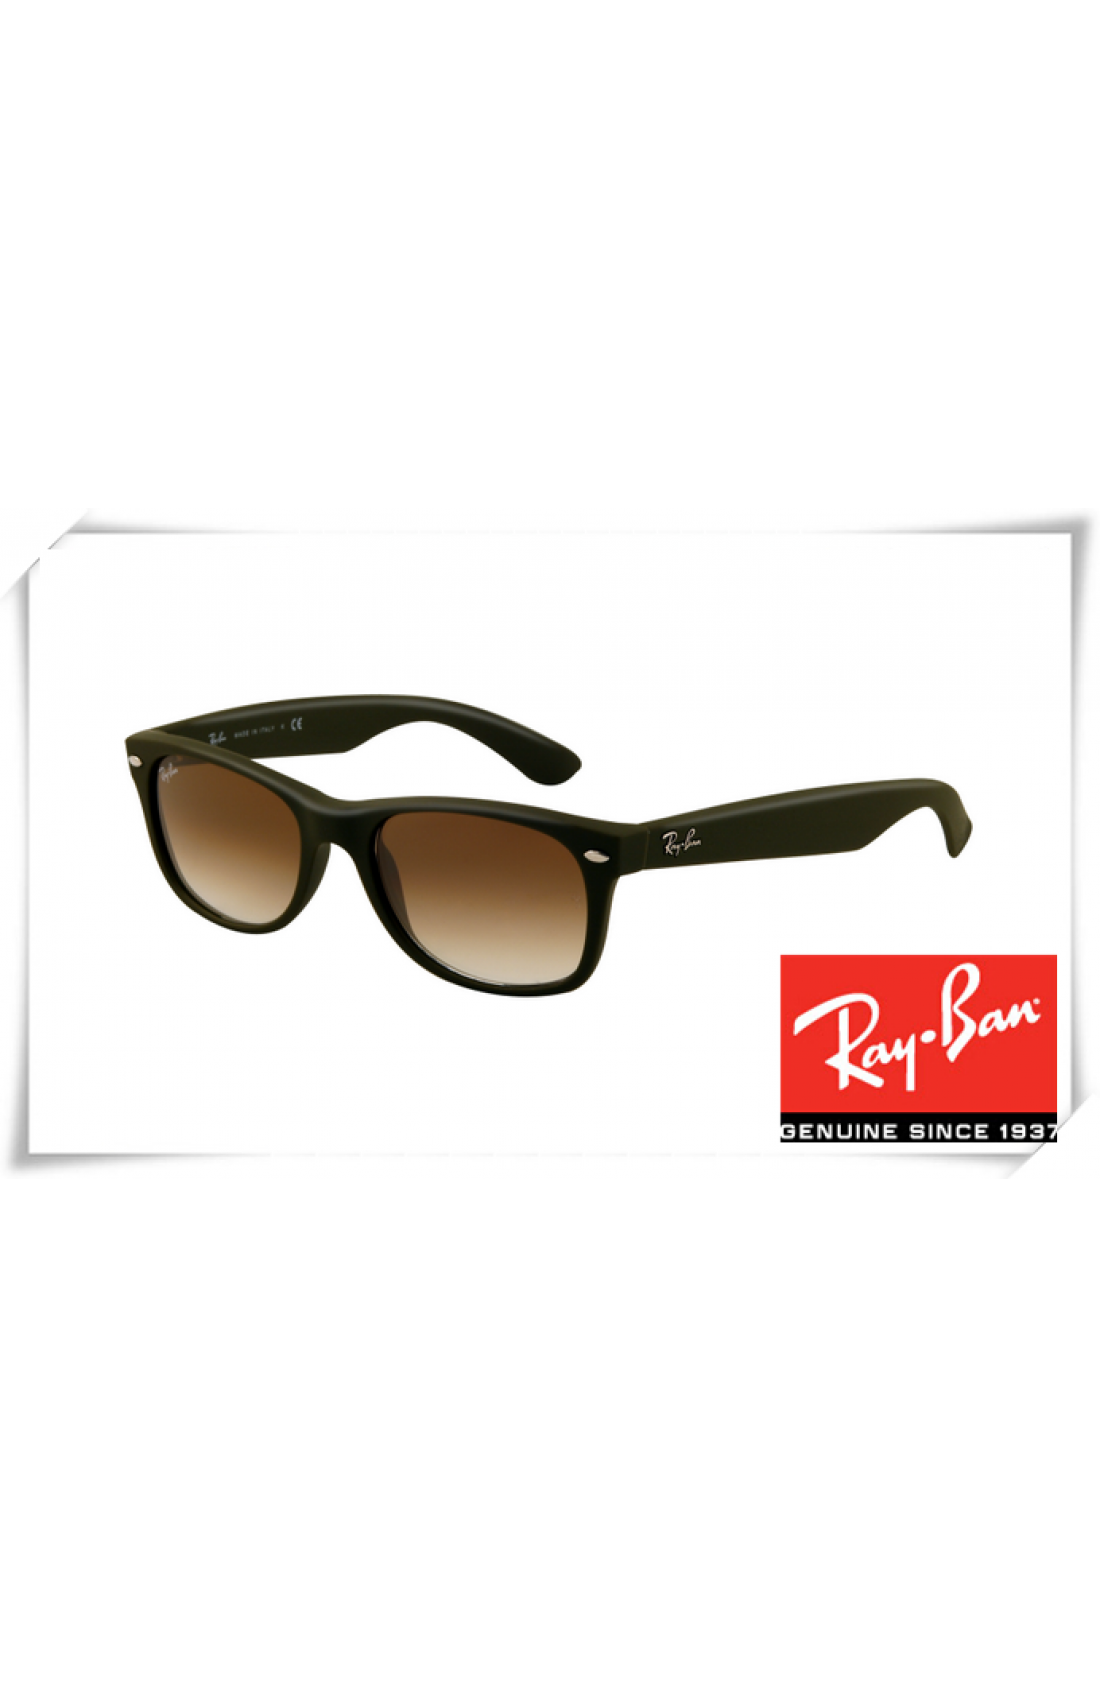 wayfarer sunglasses ray ban cheap